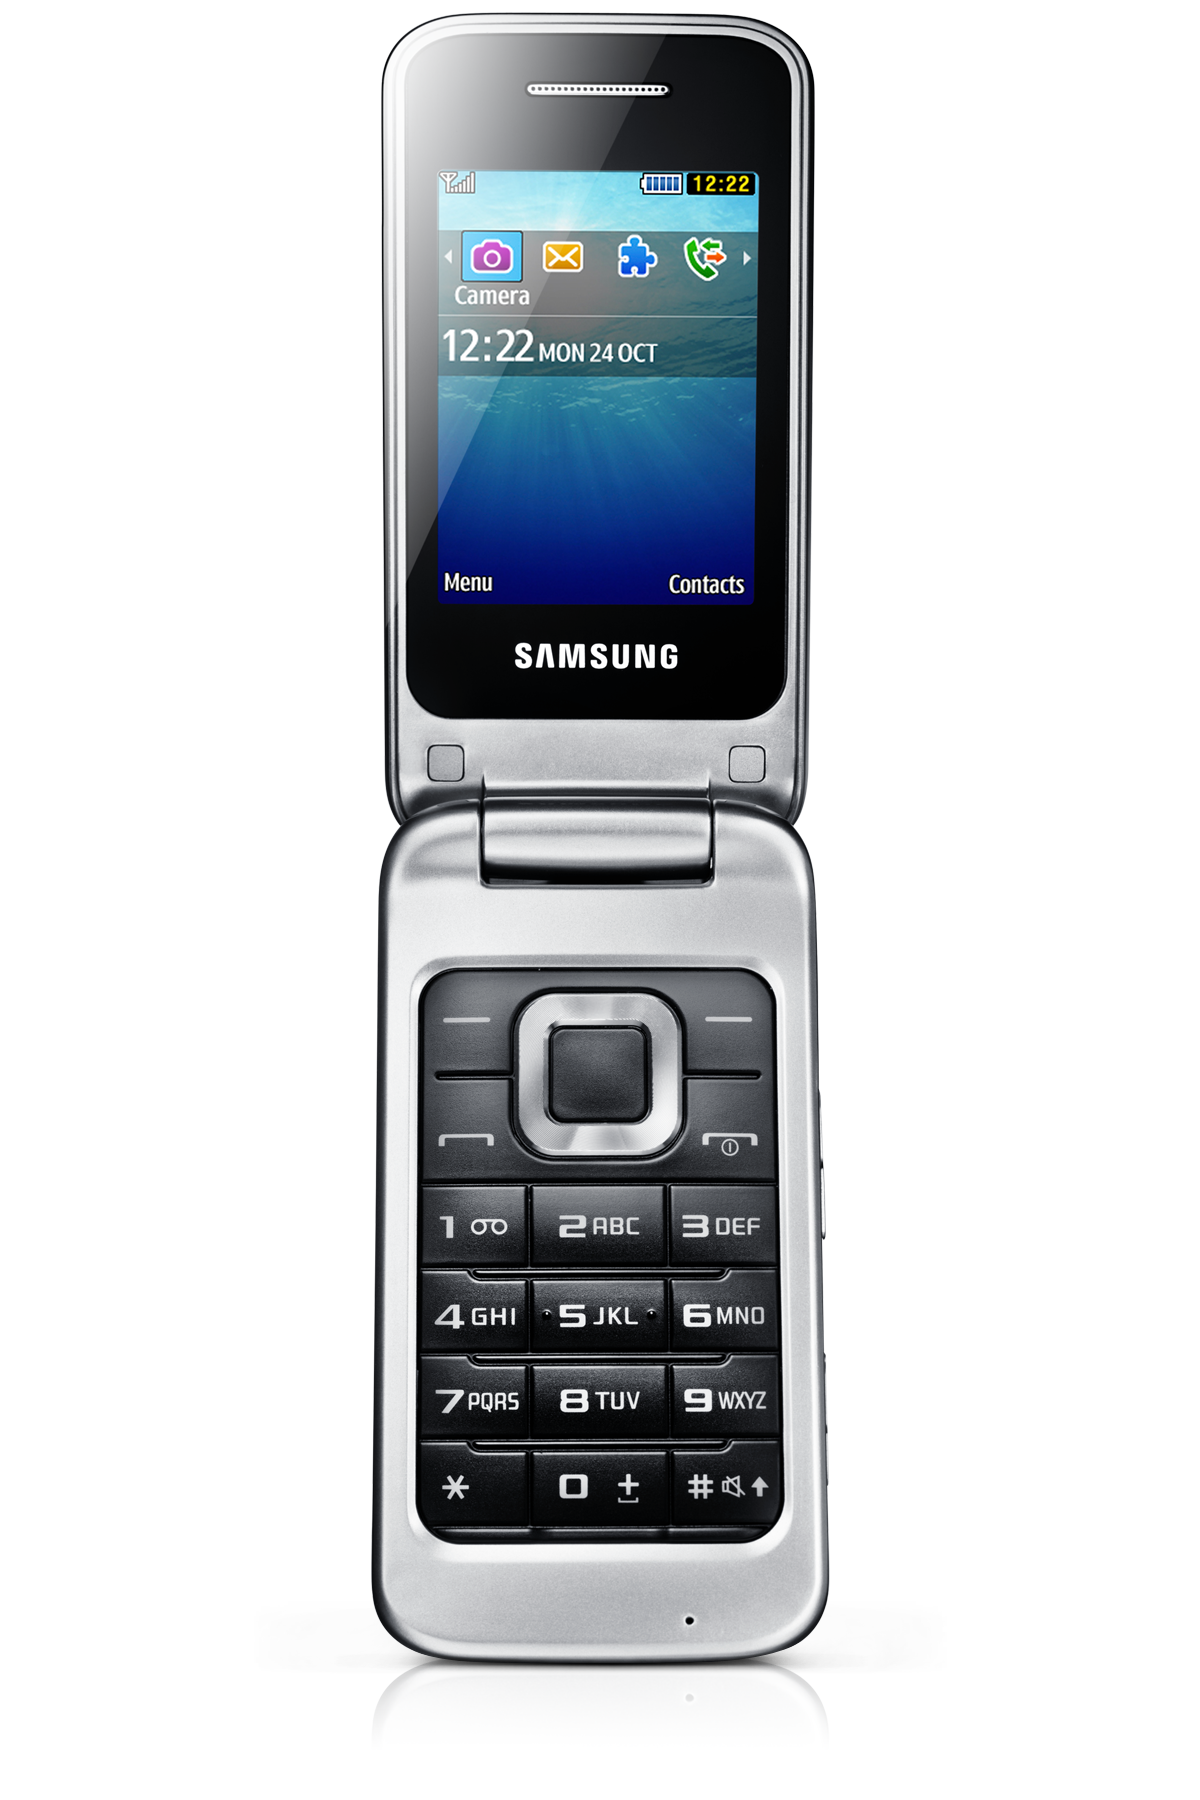 Samsung C3520 | SAMSUNG Singapore1200 x 1800